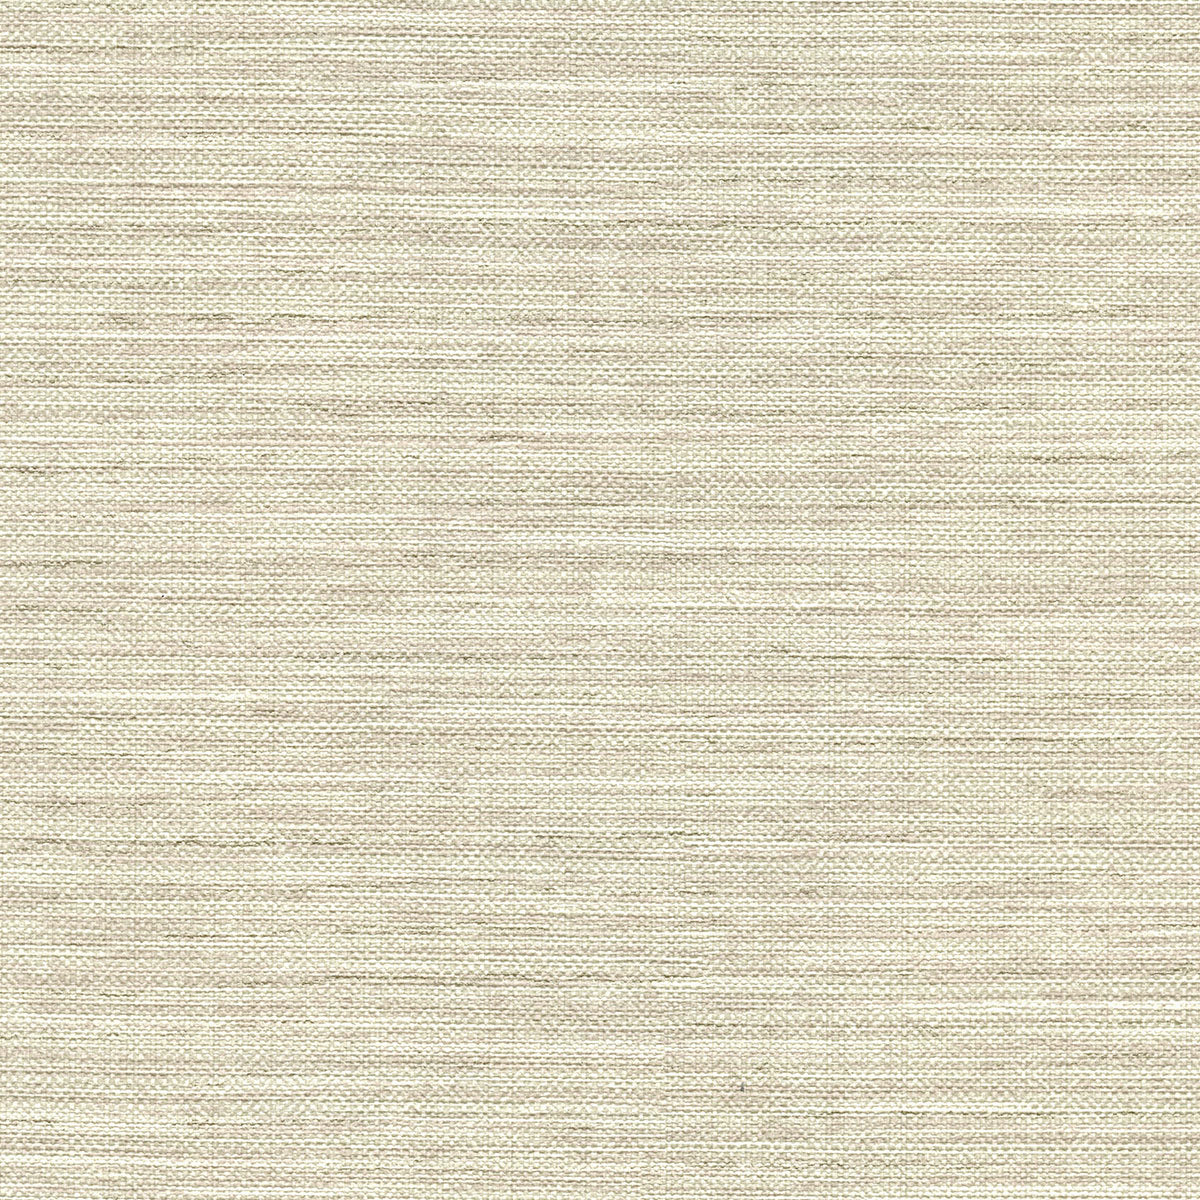 2984-8019 Warner XI Naturals & Grasscloths, Bay Ridge Taupe Faux Grasscloth Wallpaper Taupe - Warner